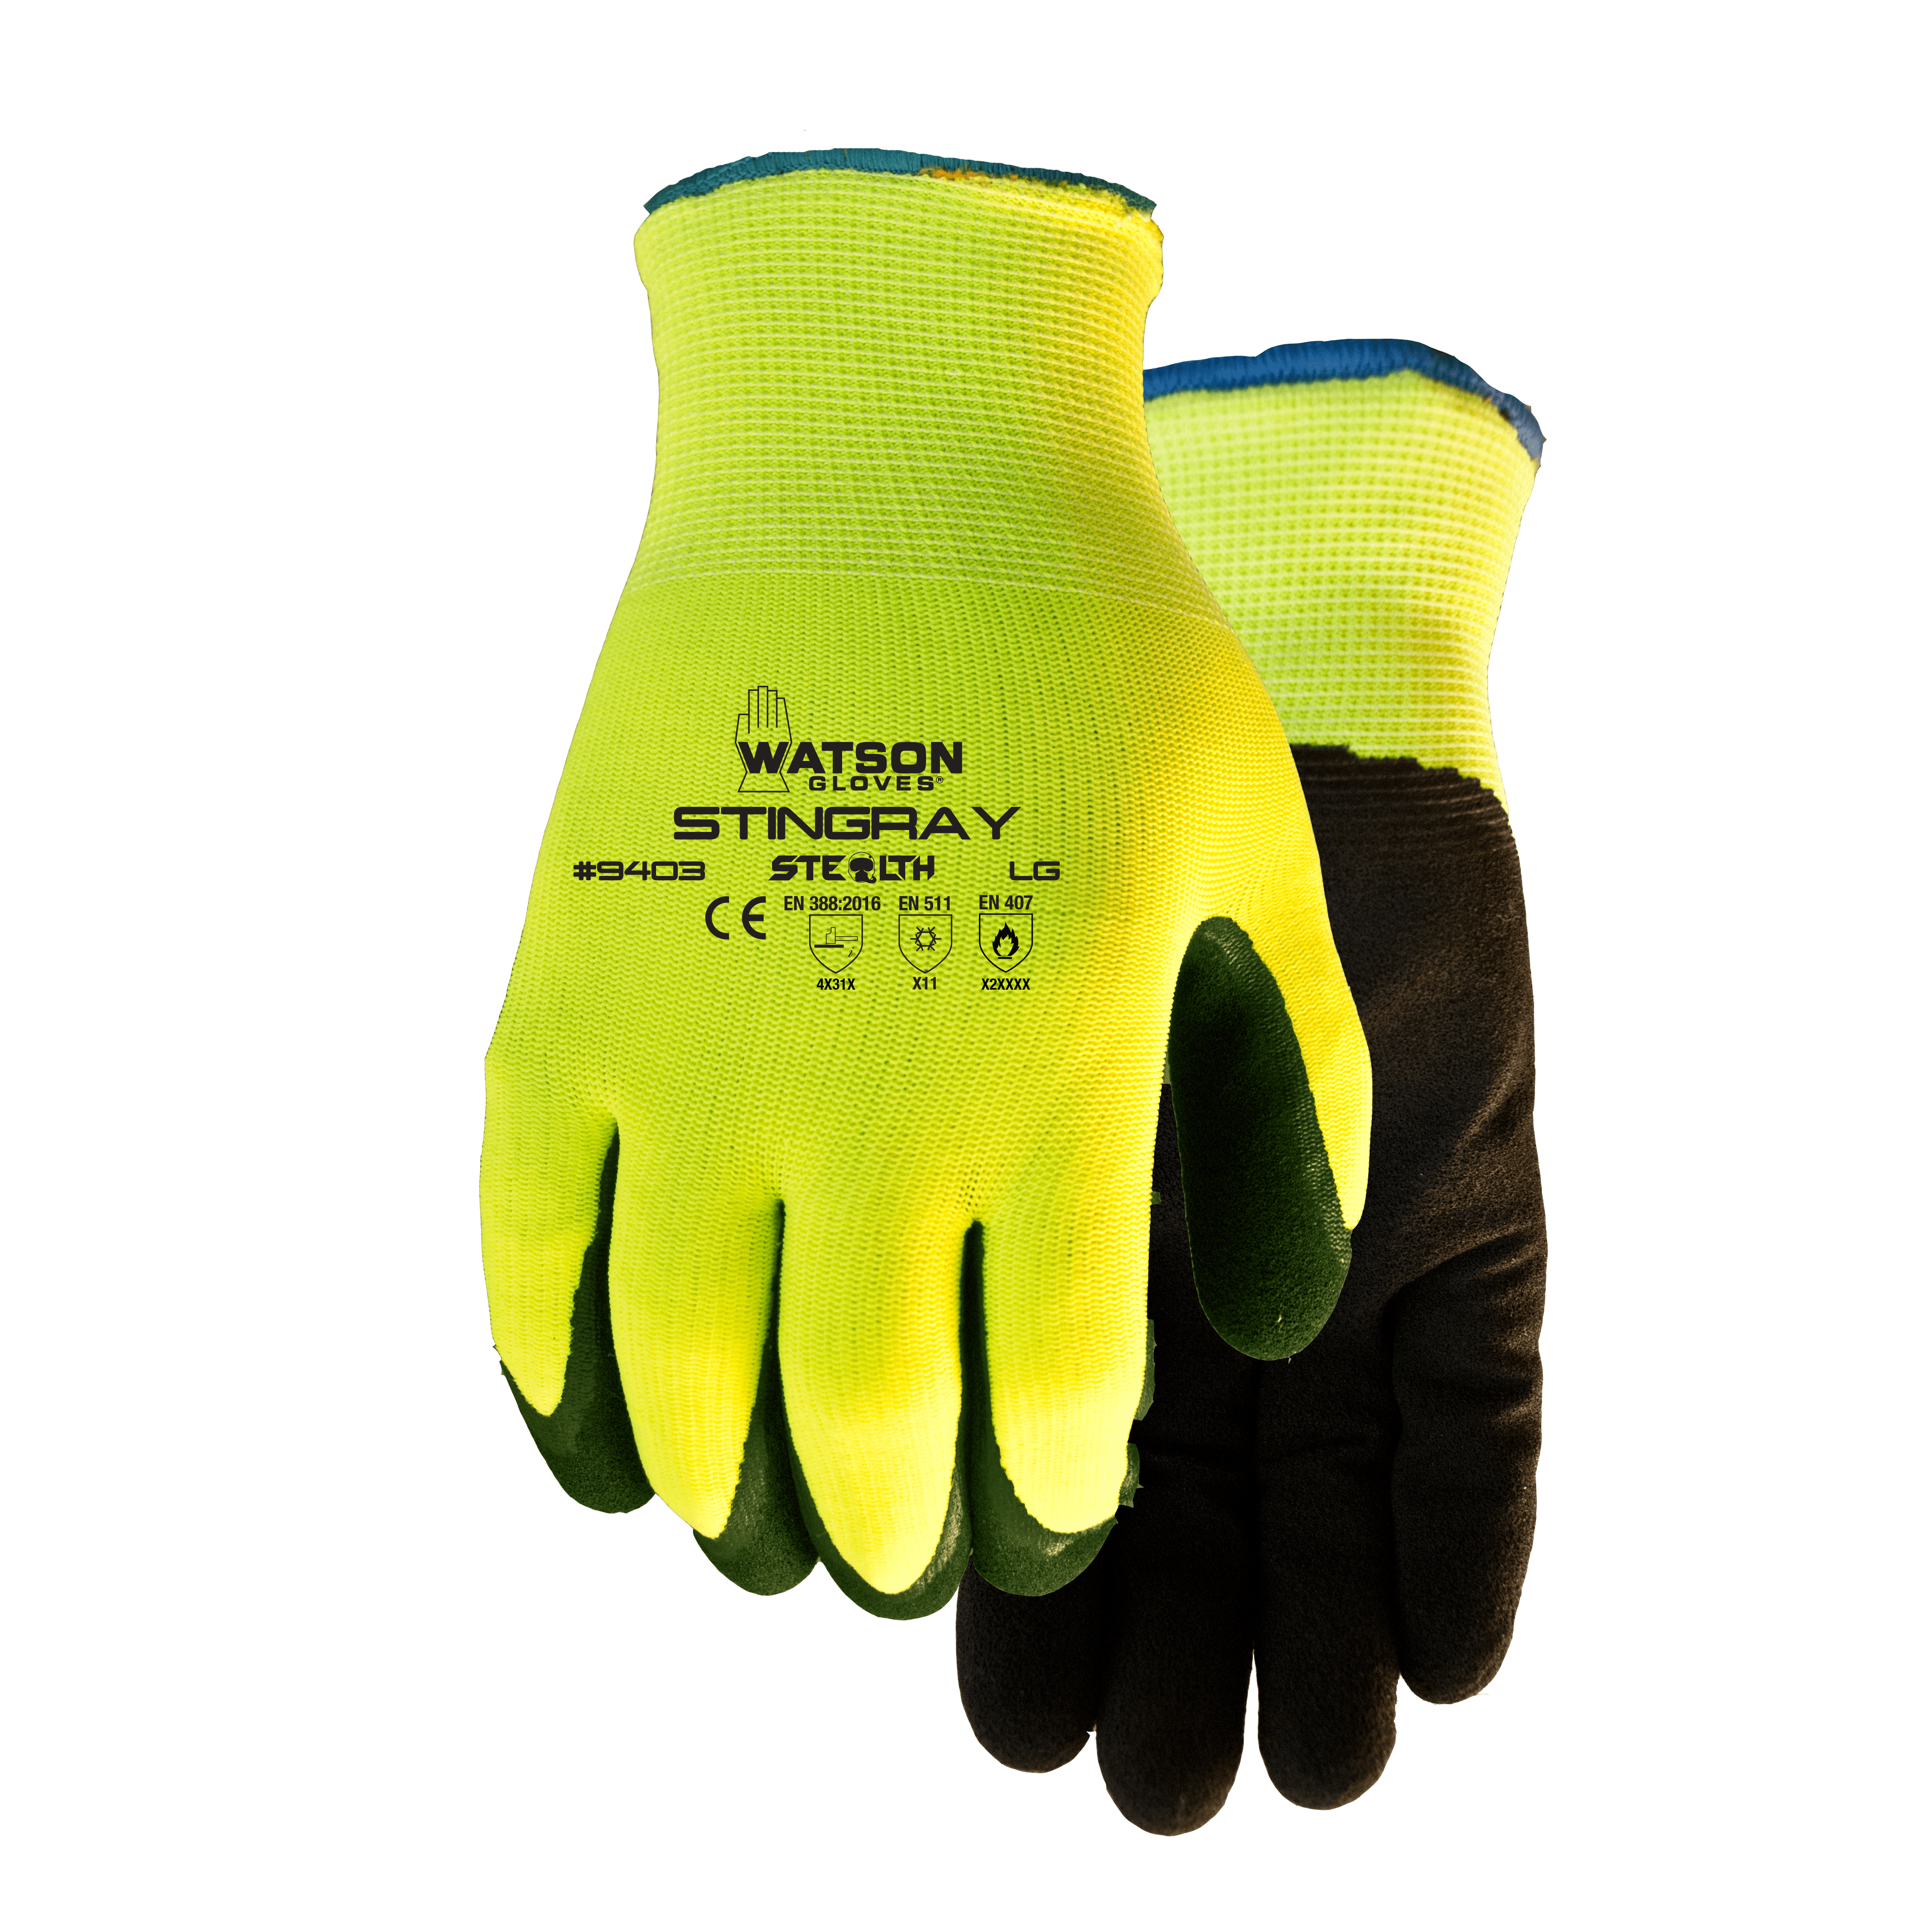 Watson Gloves STEALTH STINGRAY - SMALL